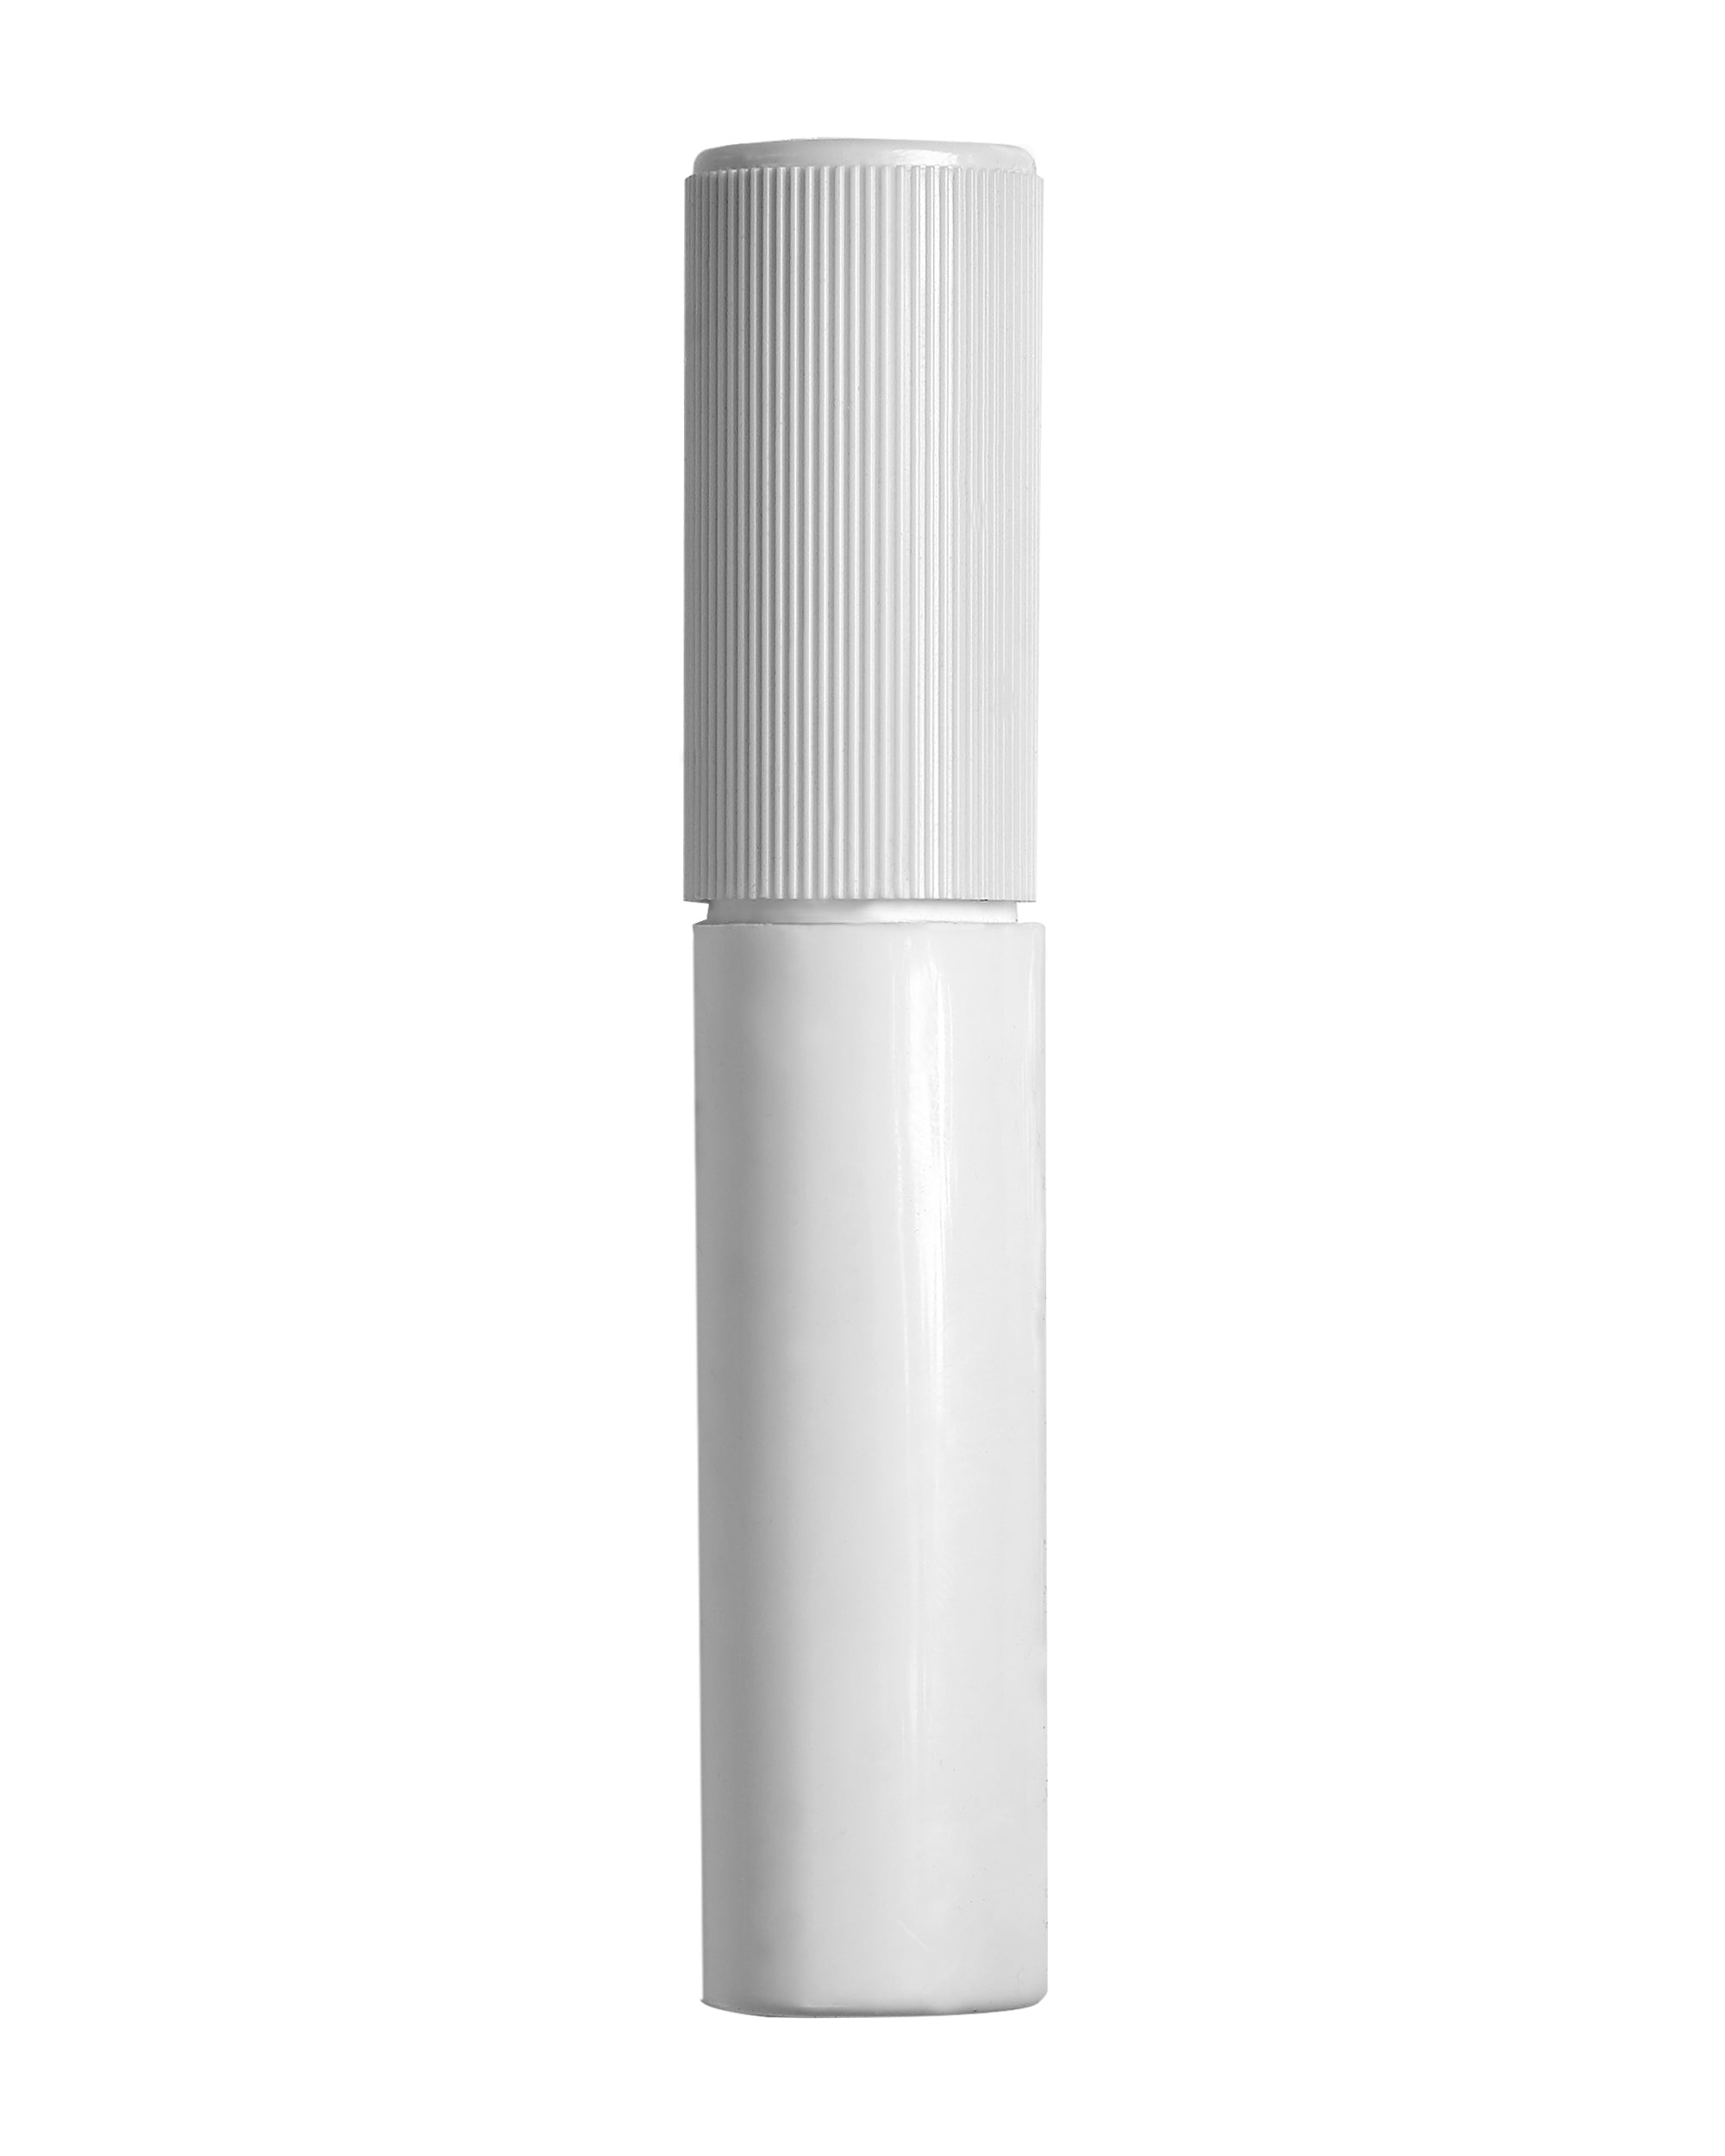 Child Resistant & Luer Lock | DymaPak Twistspenser White Plastic Dab Applicator Syringes | 1mL - 0.33mL Increments - 3